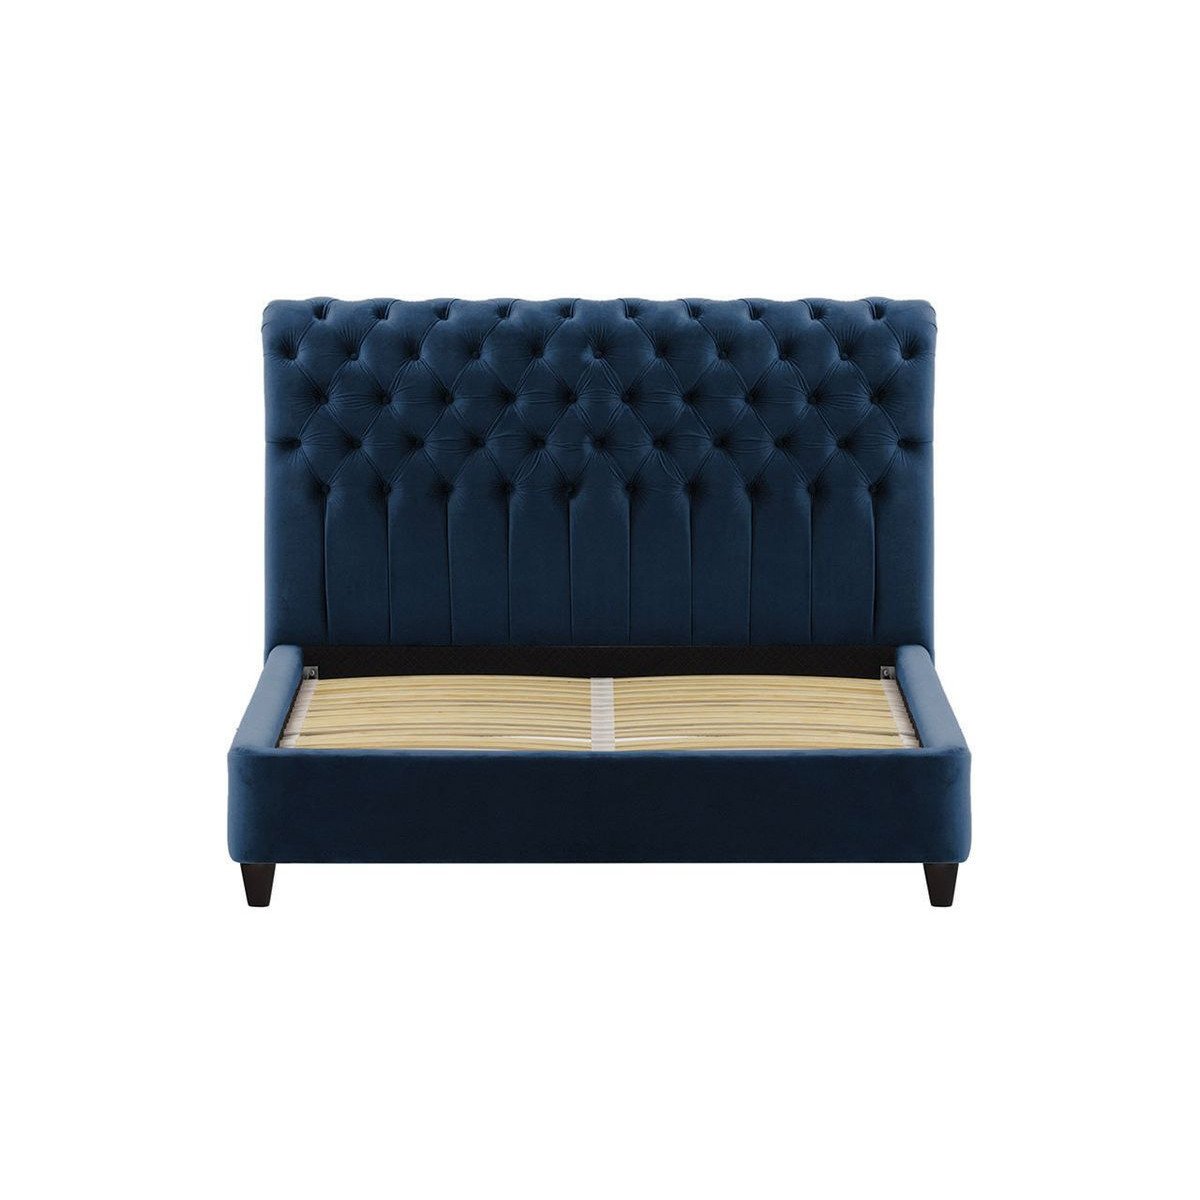 Hai Upholstered Bed Frame, blue - image 1